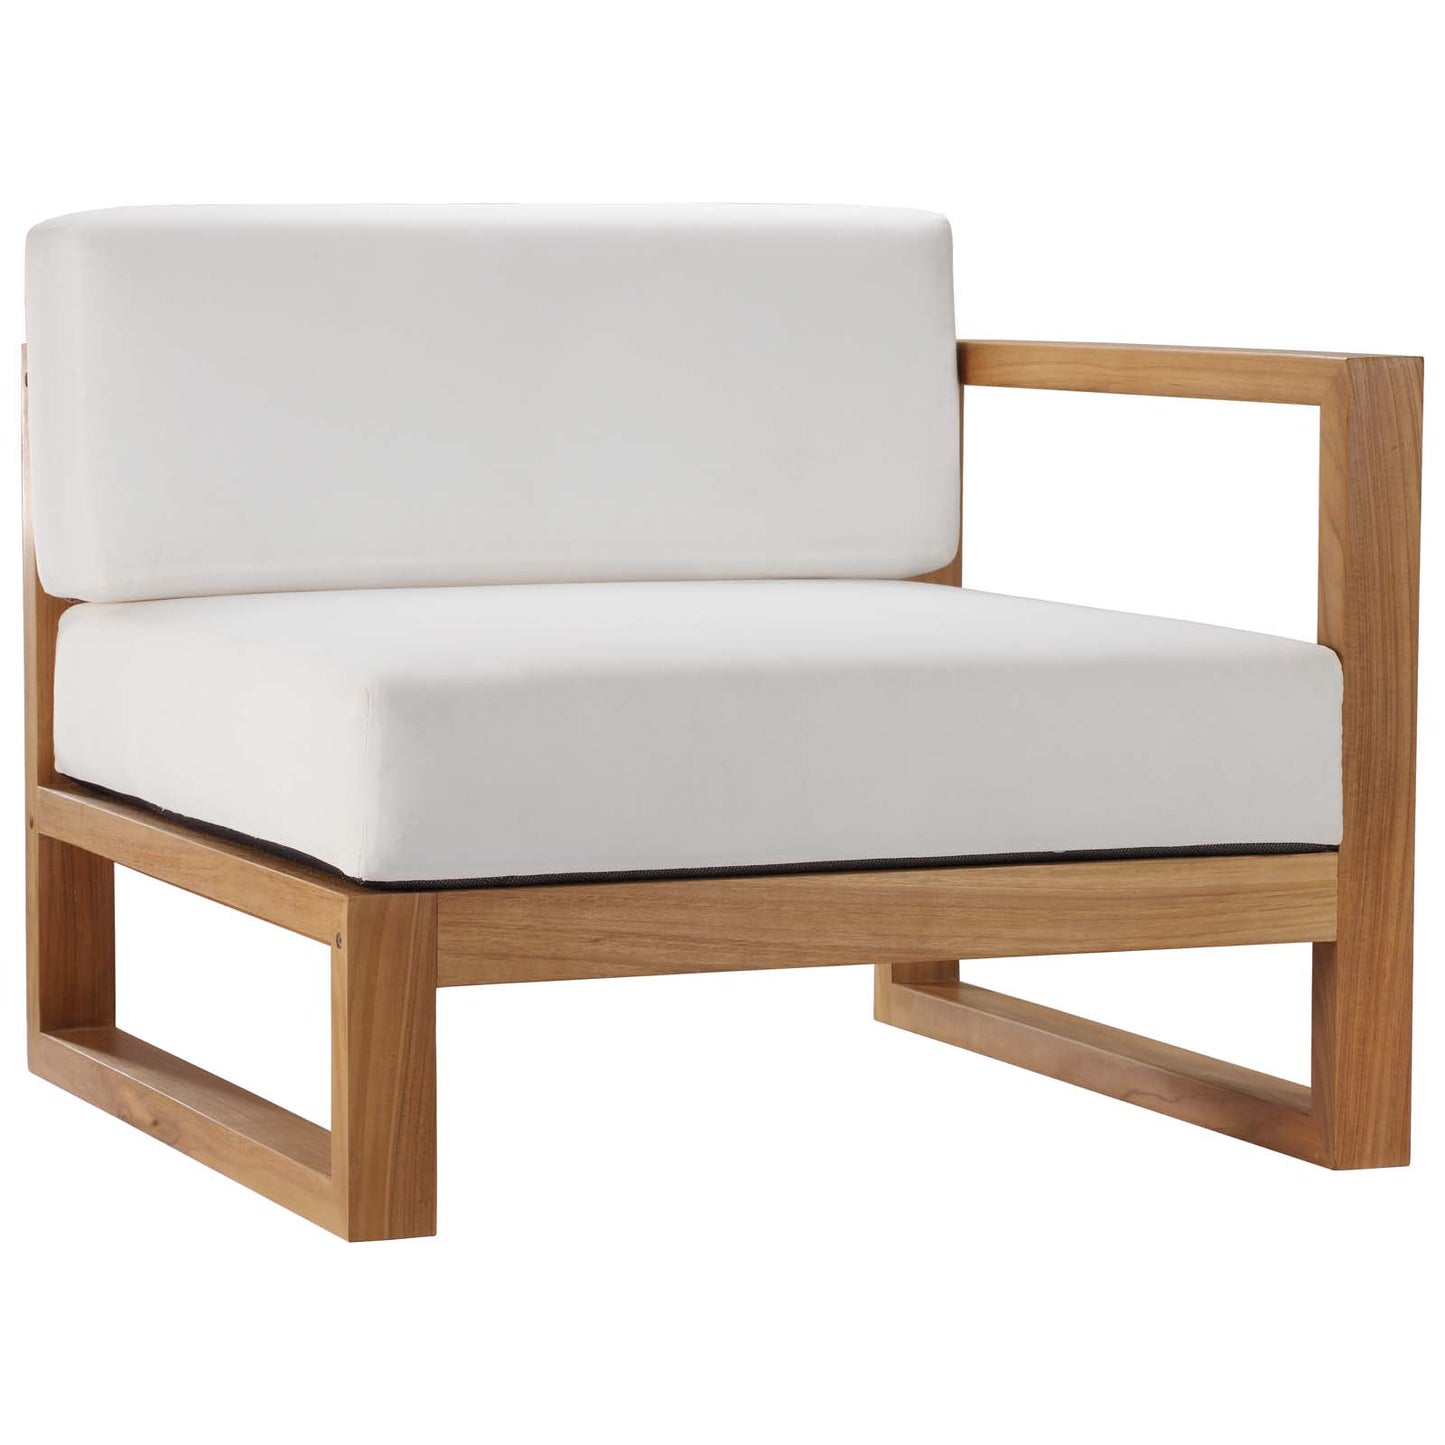 Upland Outdoor Patio Teak Wood 3-Piece Sectional Sofa Set Natural White EEI-4255-NAT-WHI-SET